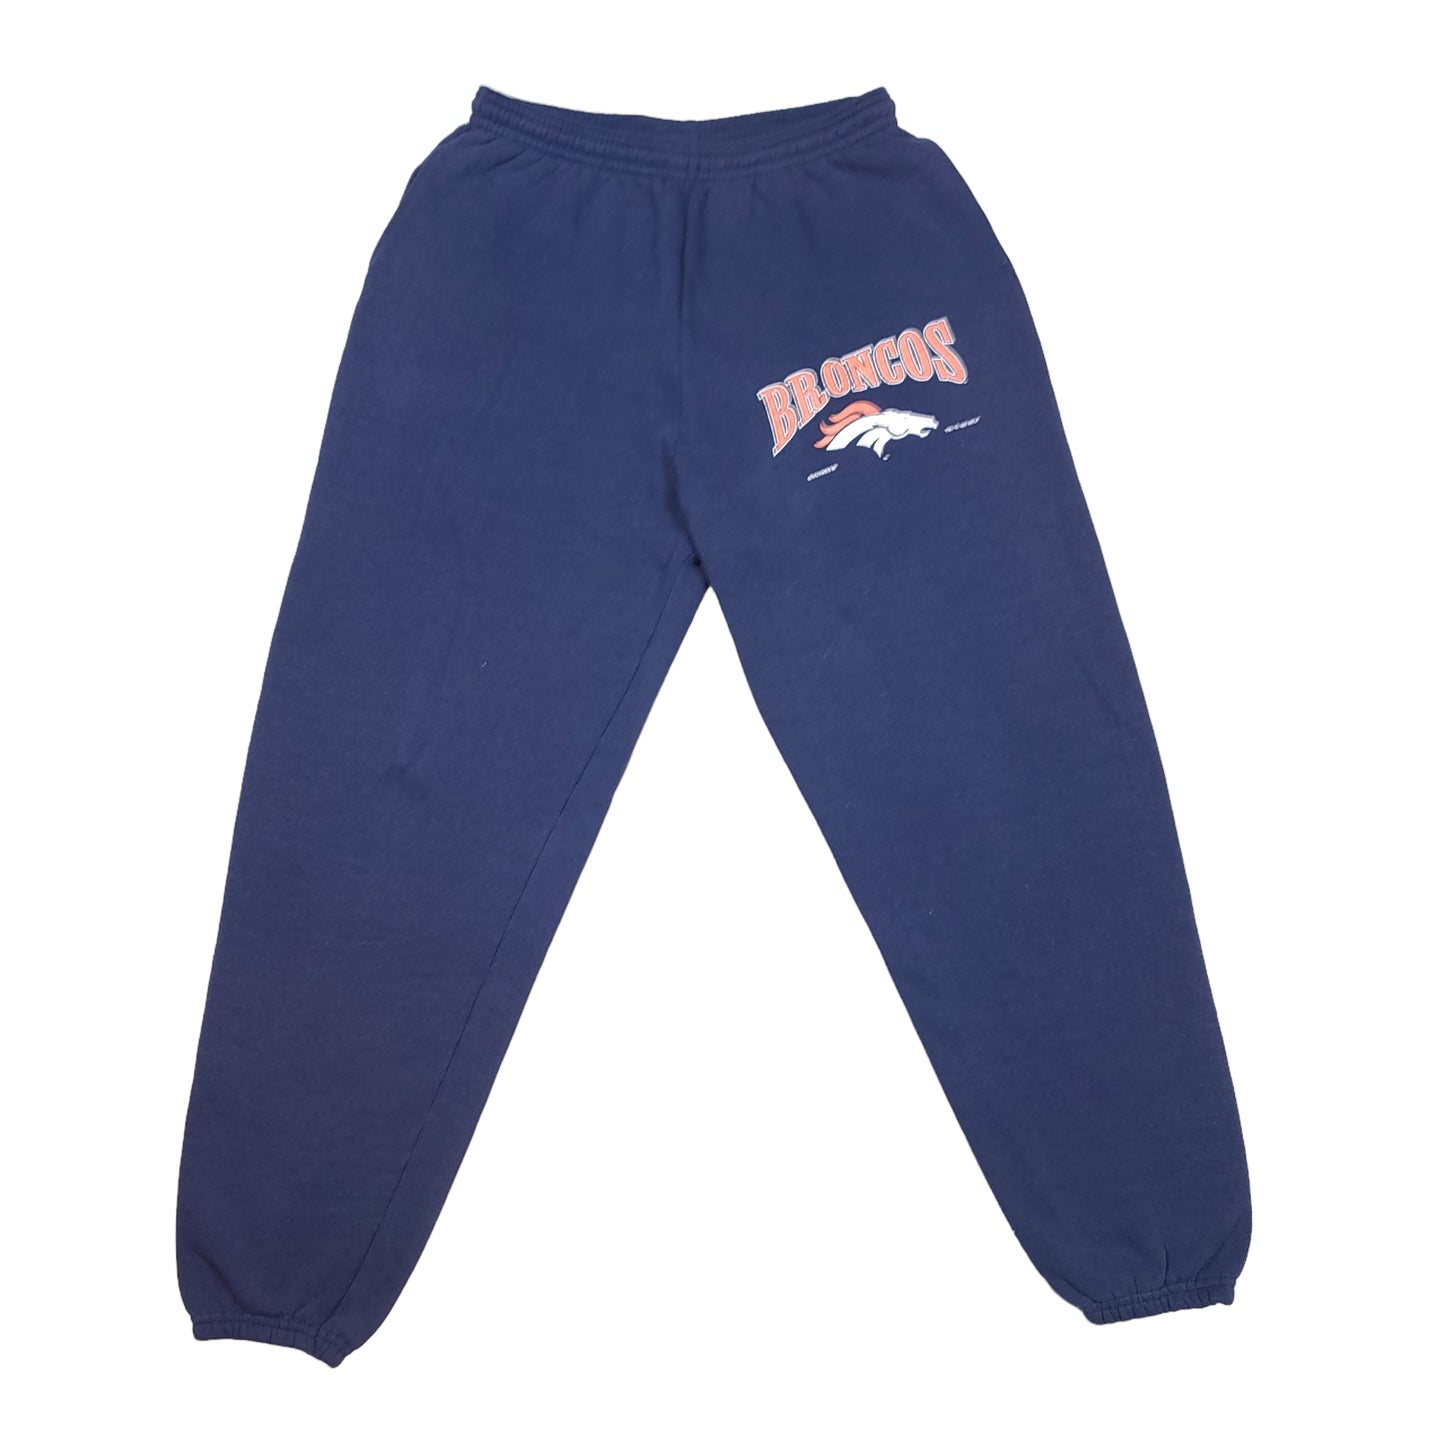 Broncos Navy Blue Sweatpants